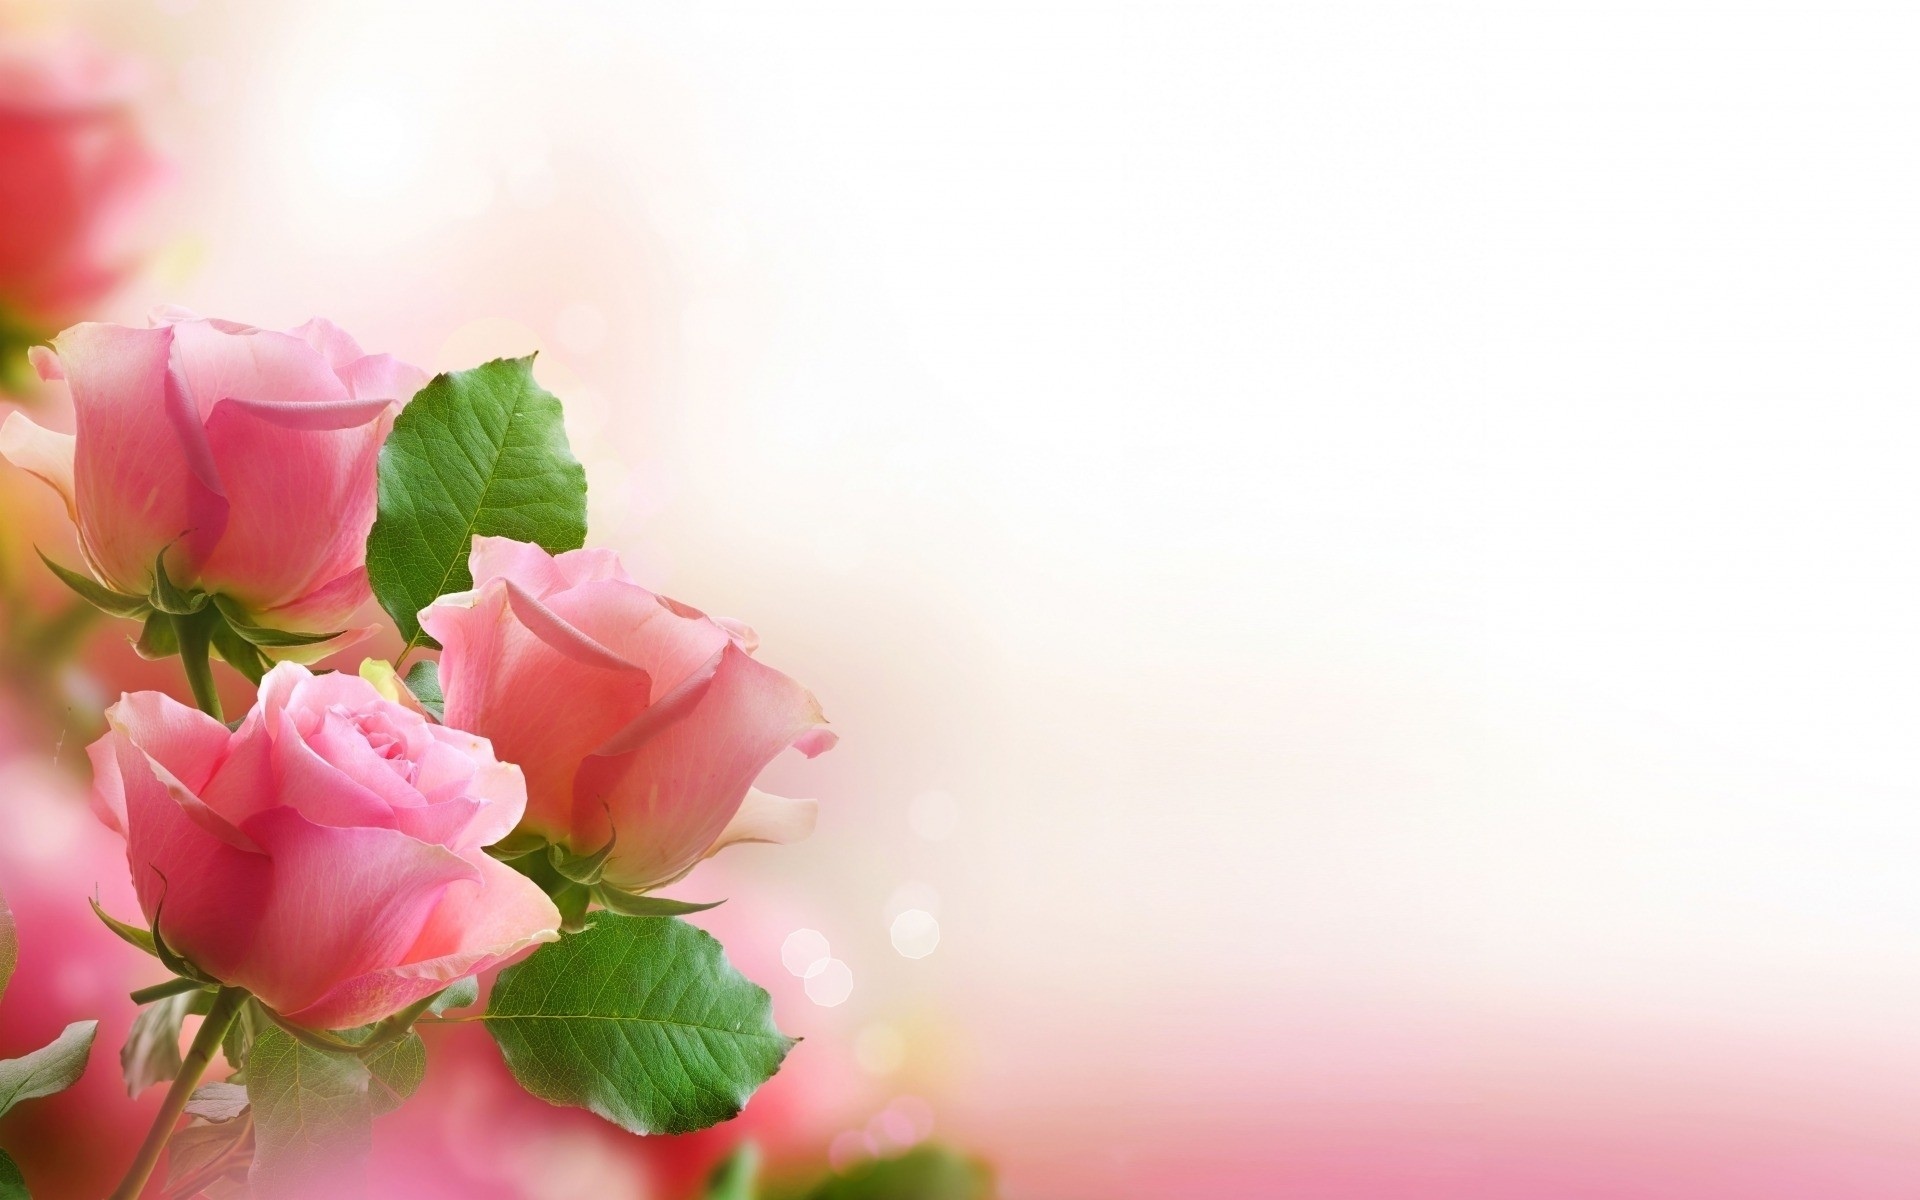 Flowers Art Roses Love Romance Pink Leaves Mood Wallpaper Background